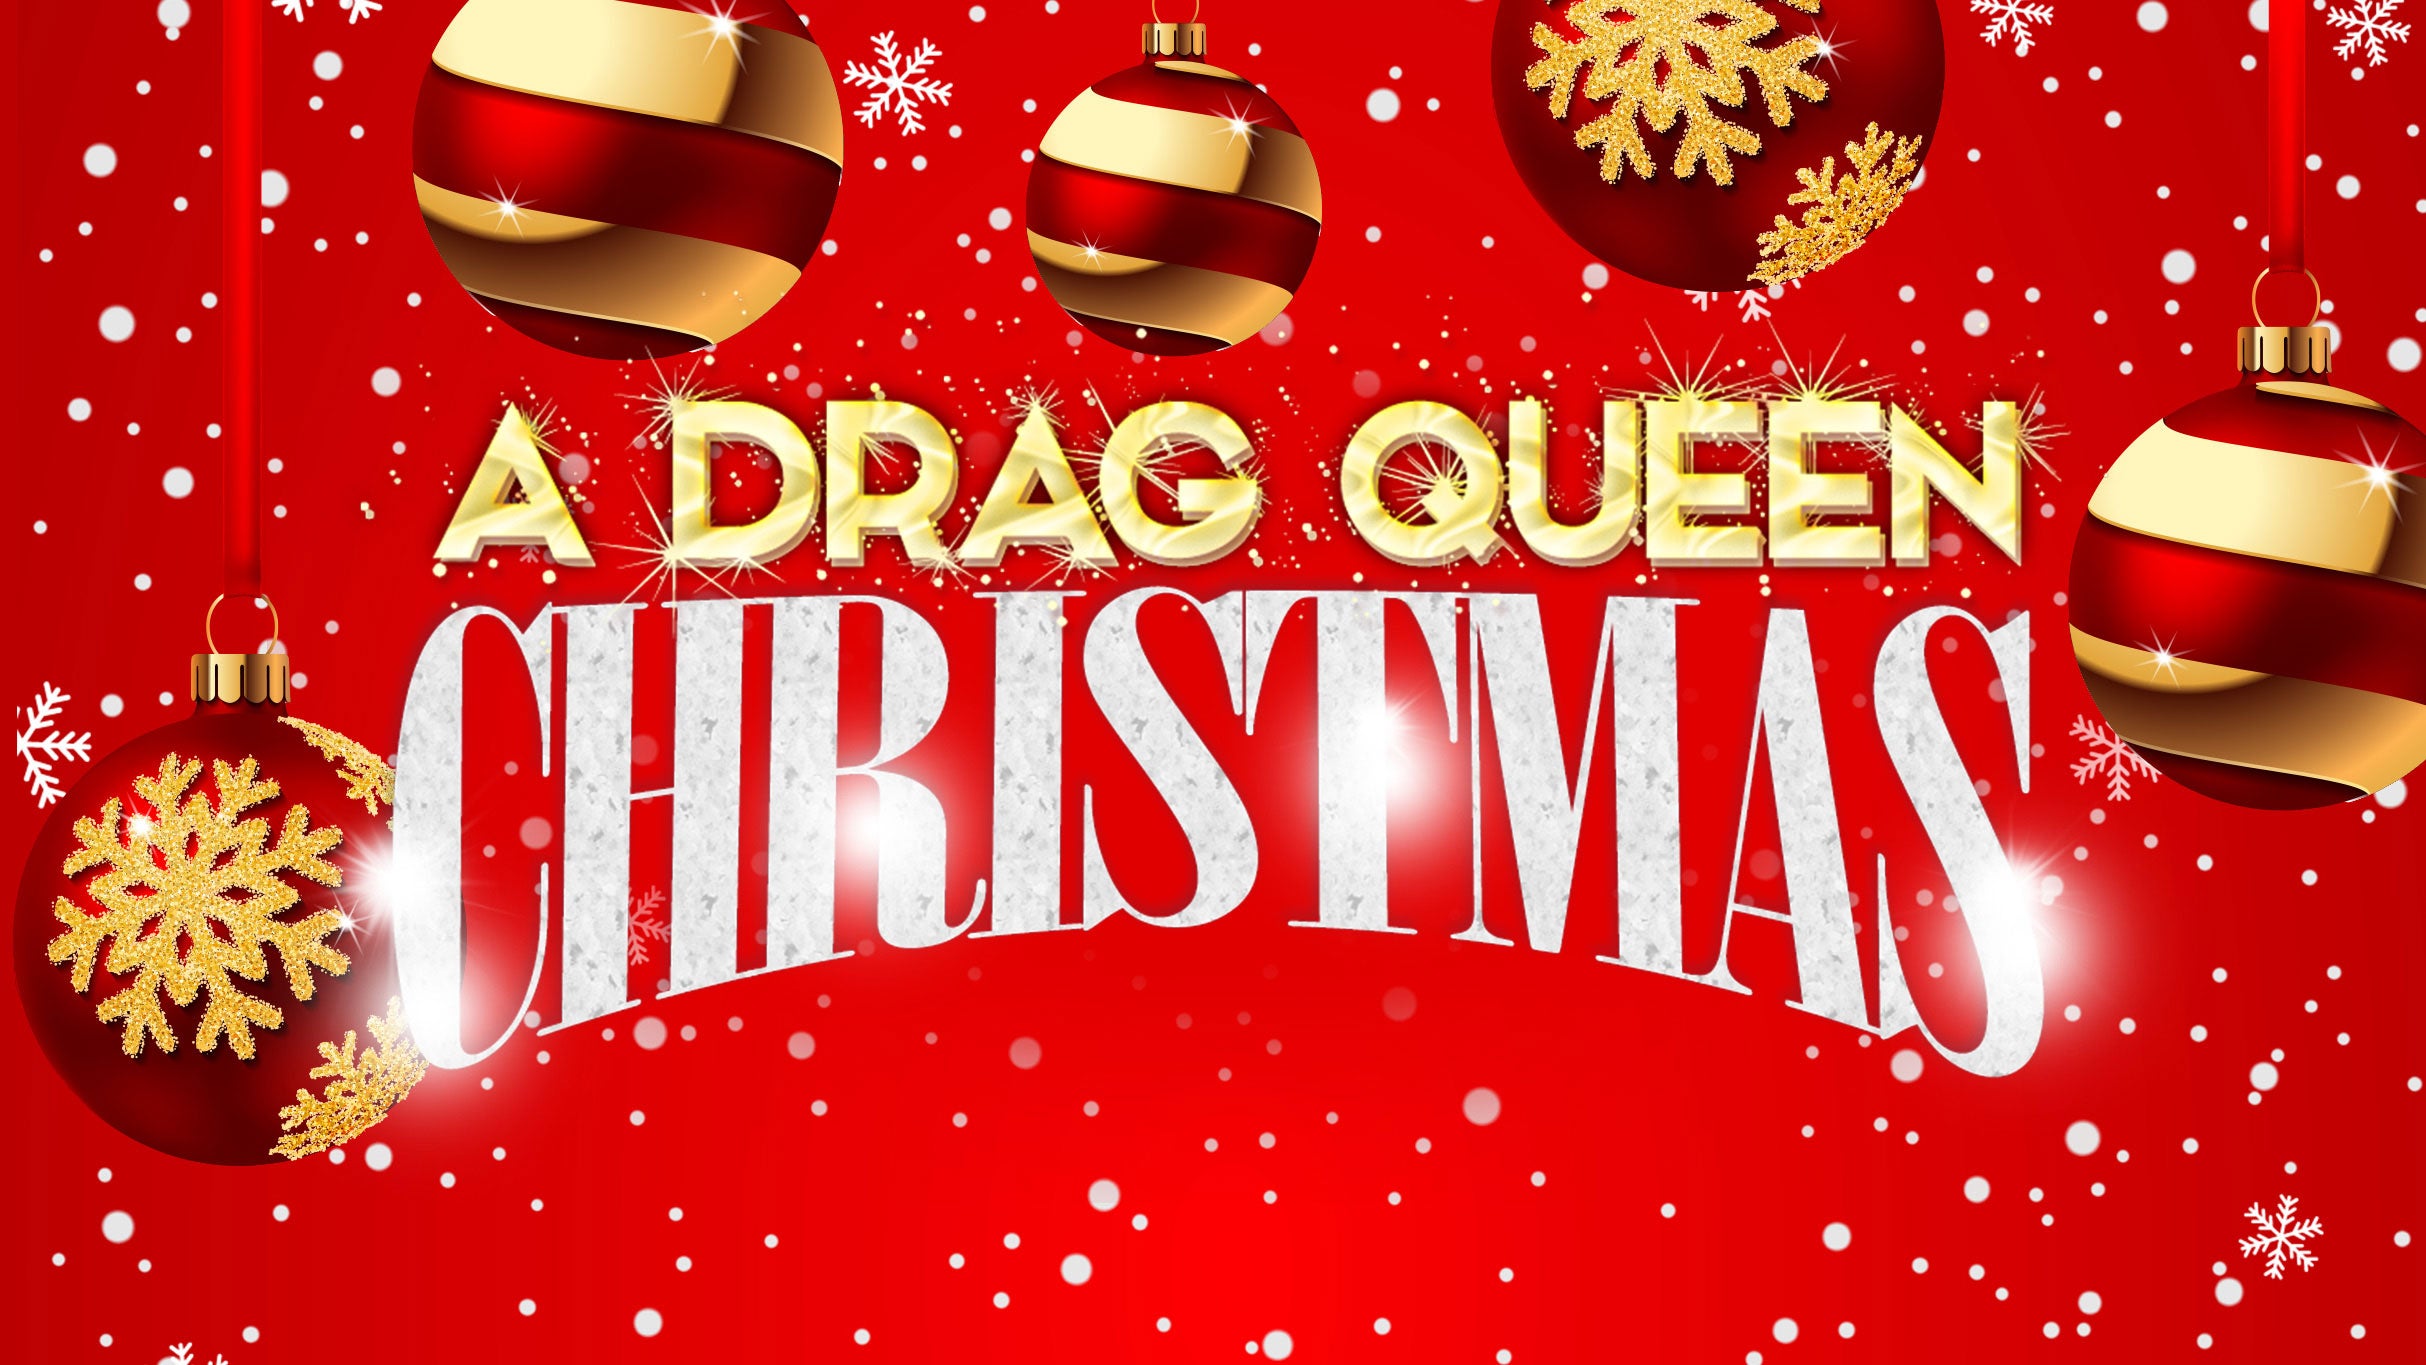 A Drag Queen Christmas pre-sale password for show tickets in Stockton, CA (Bob Hope Theatre)